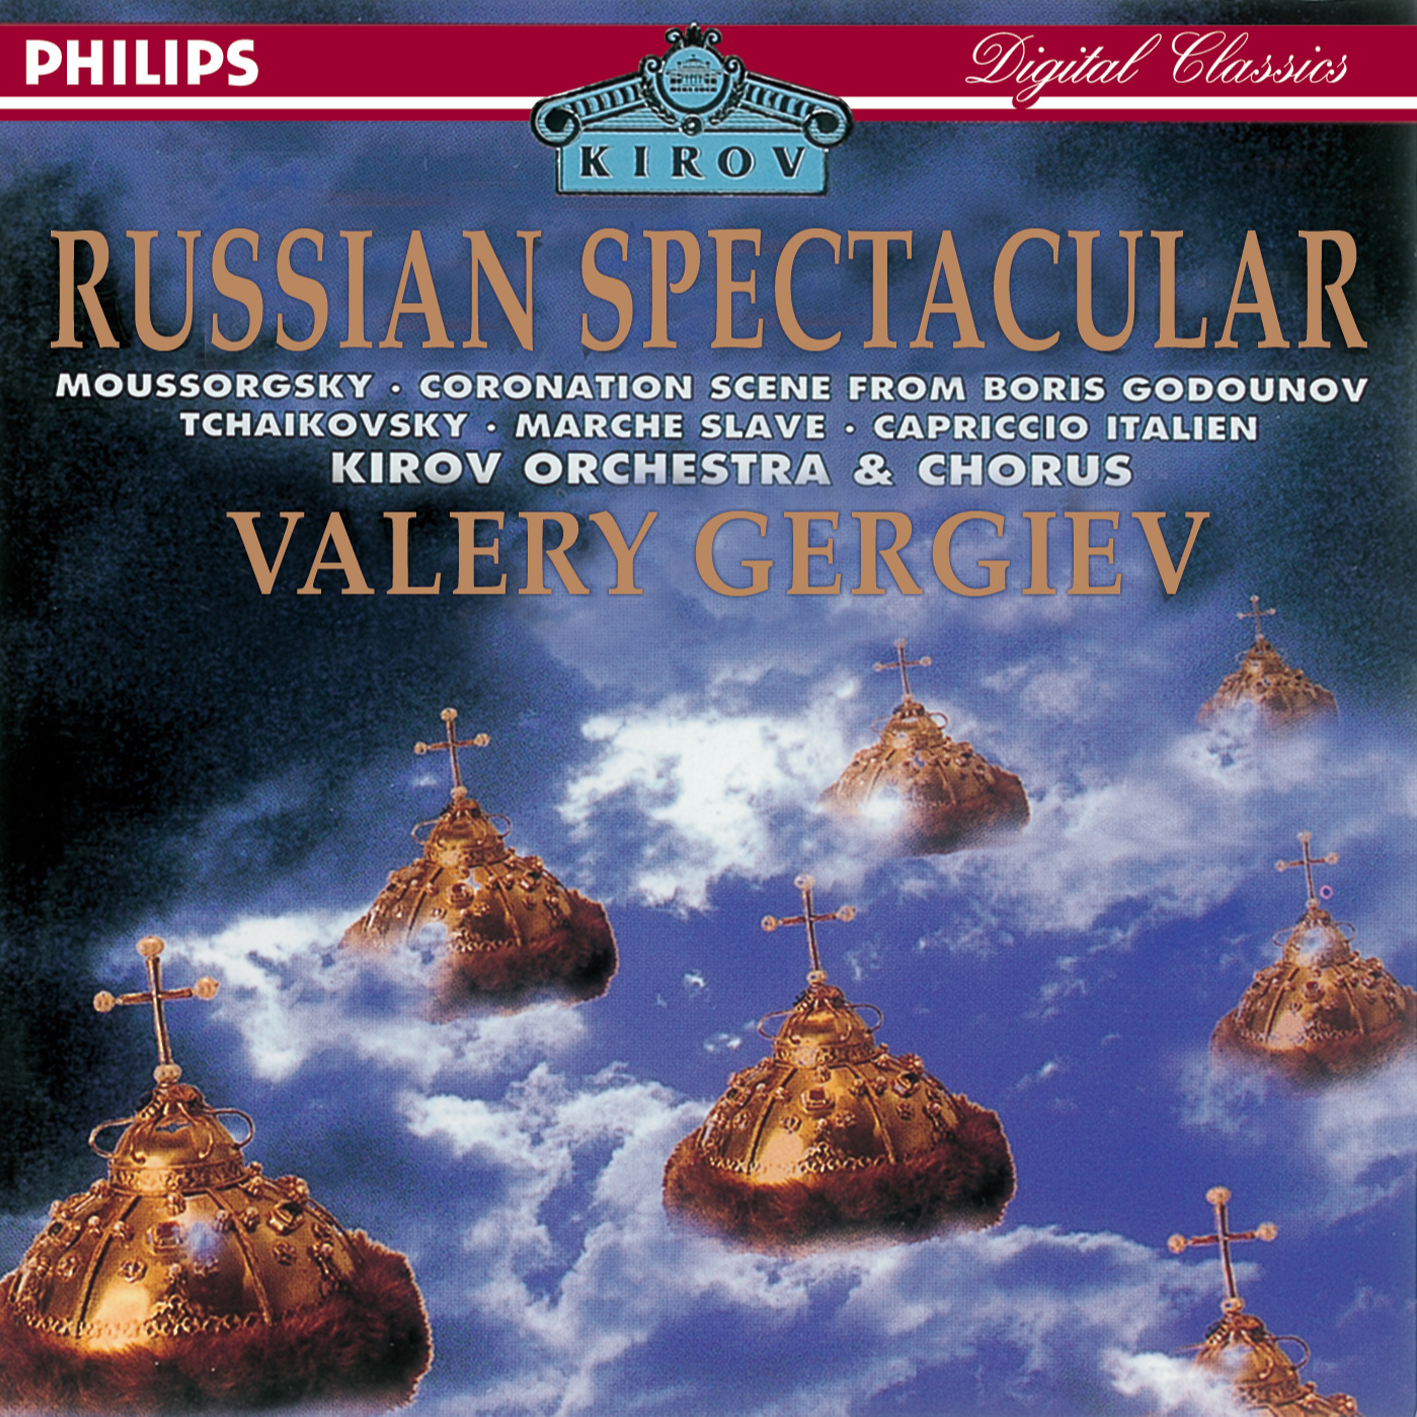 Chorus of the Kirov Opera, St. Petersburg - The Sleeping Beauty Op.66 TH.13 / Act 1:6. Valse